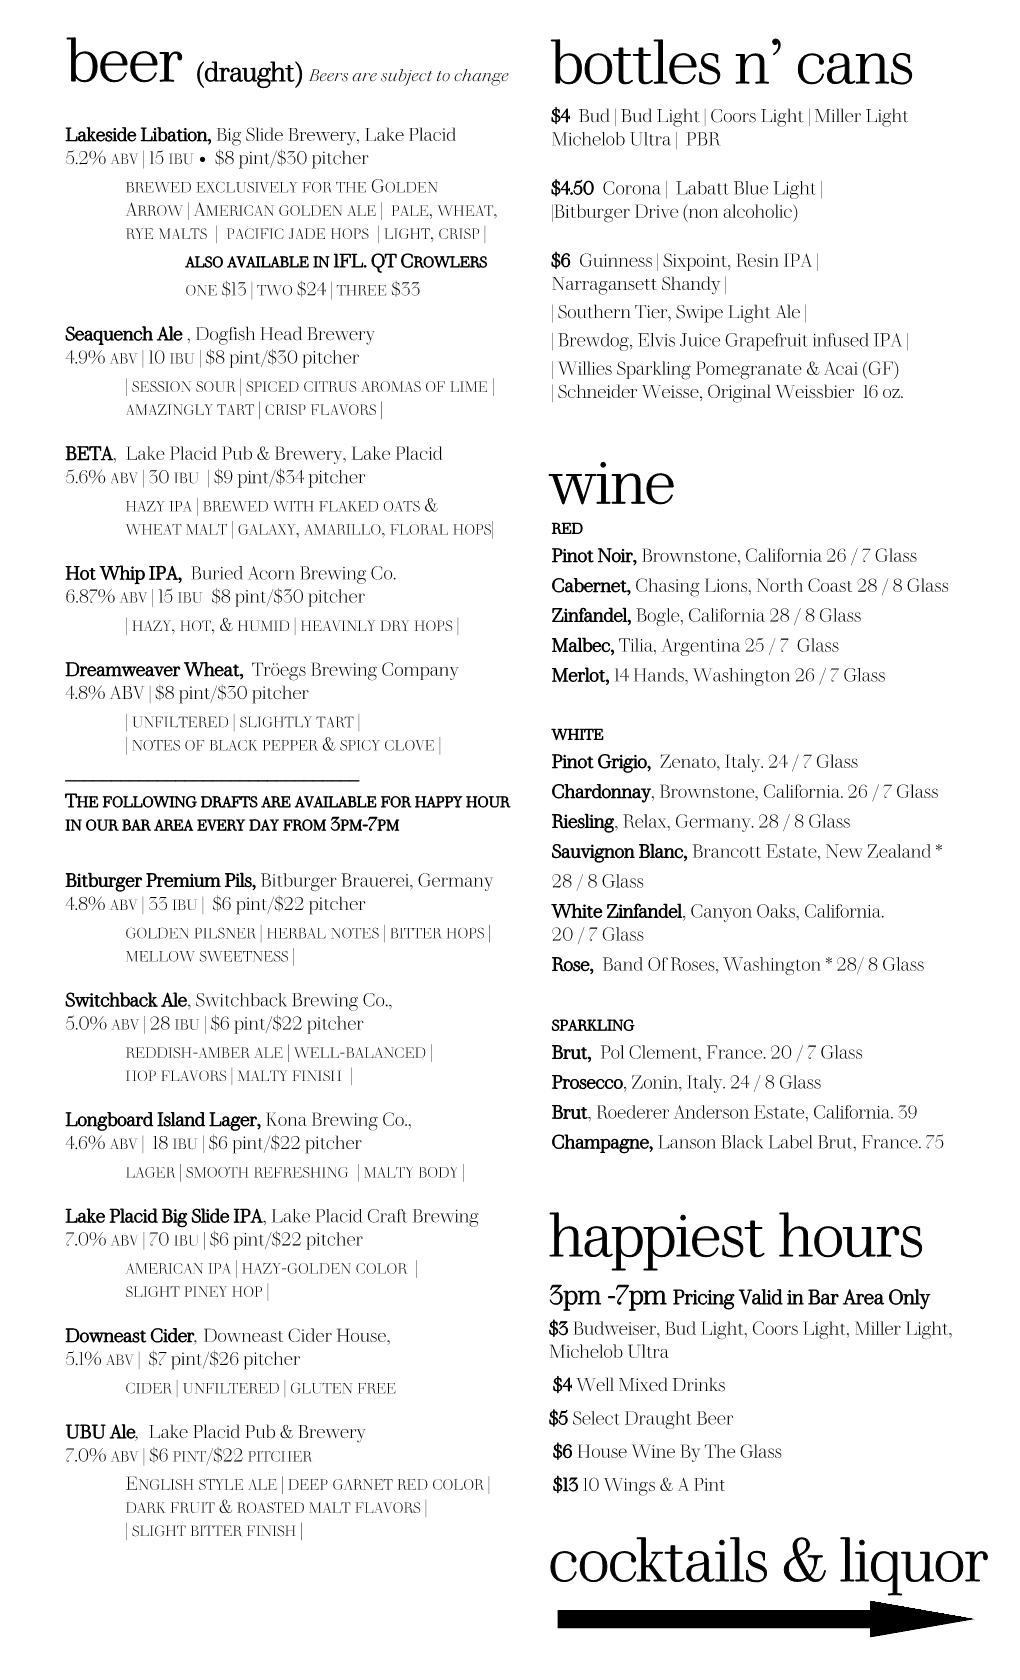 Bottles N' Cans Happiest Hours Cocktails & Liquor Wine